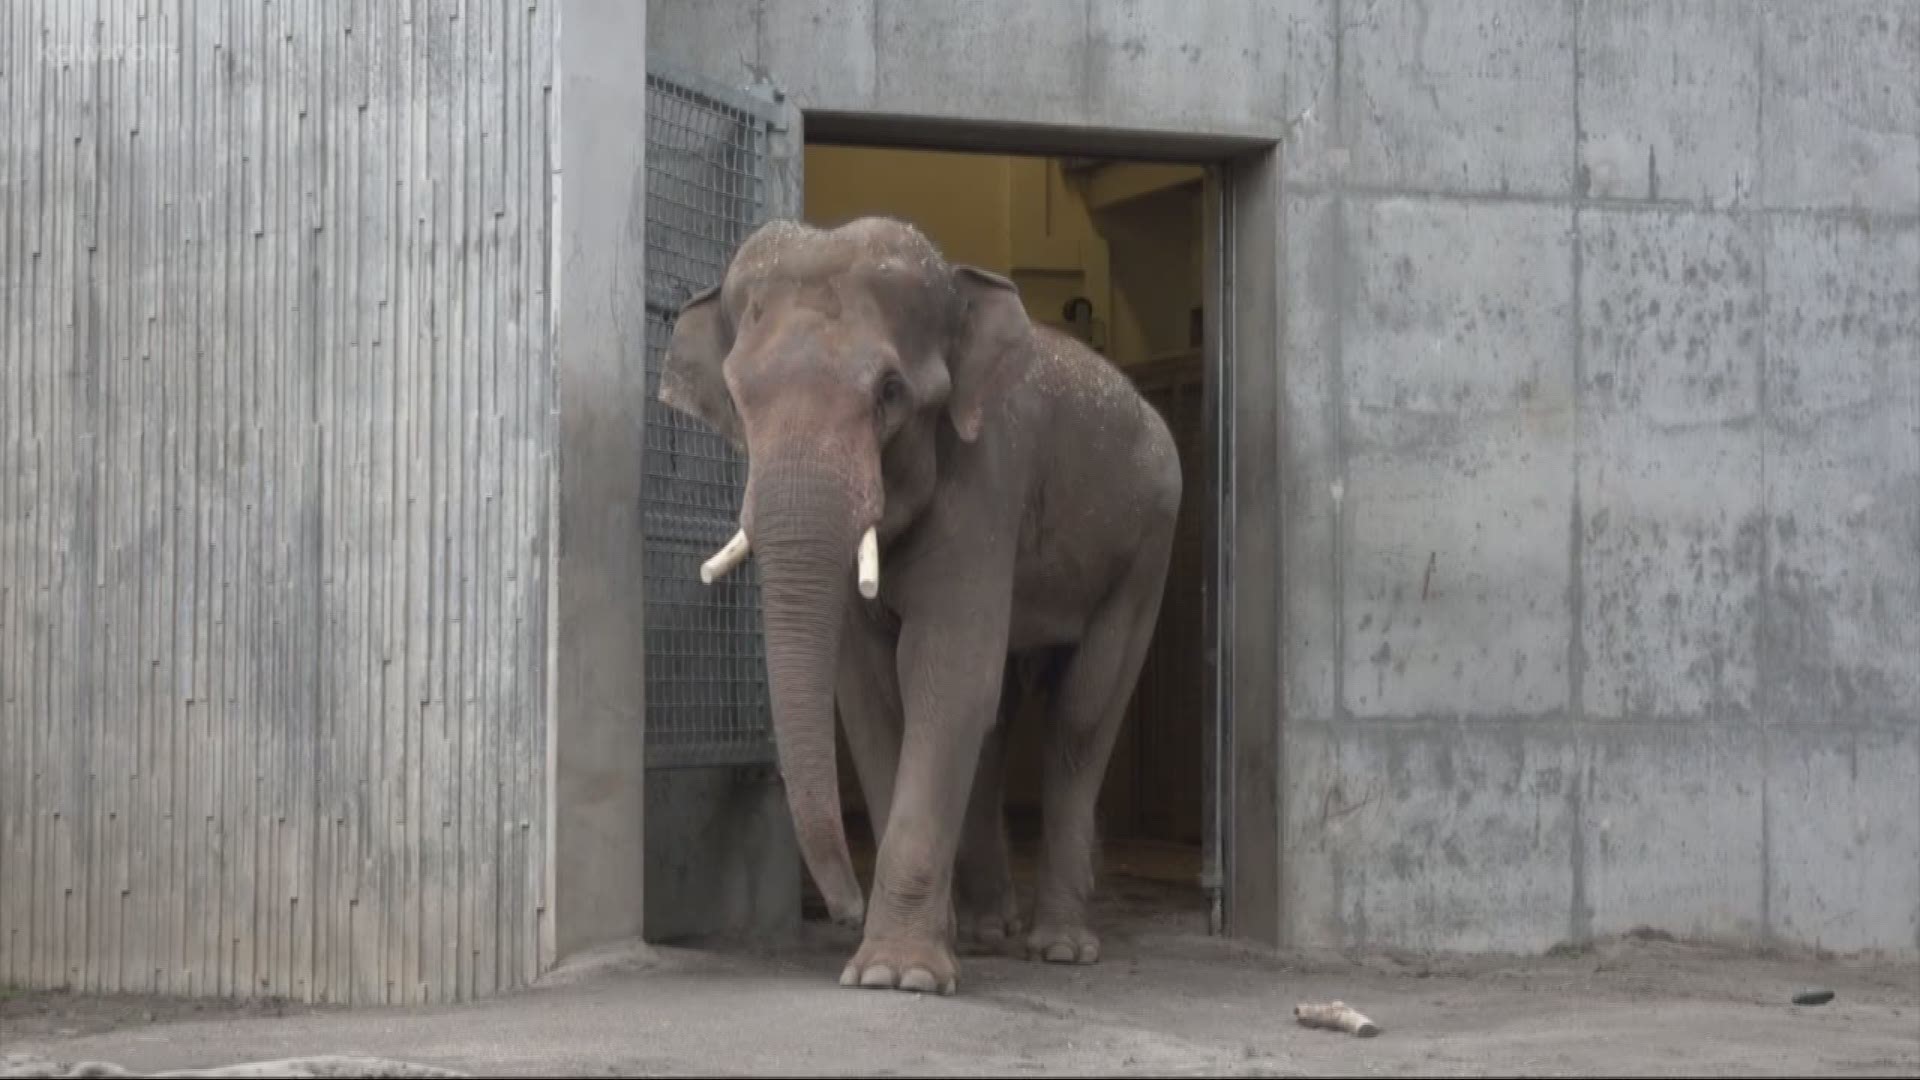 New elephant 'Samson' arrives at Oregon Zoo